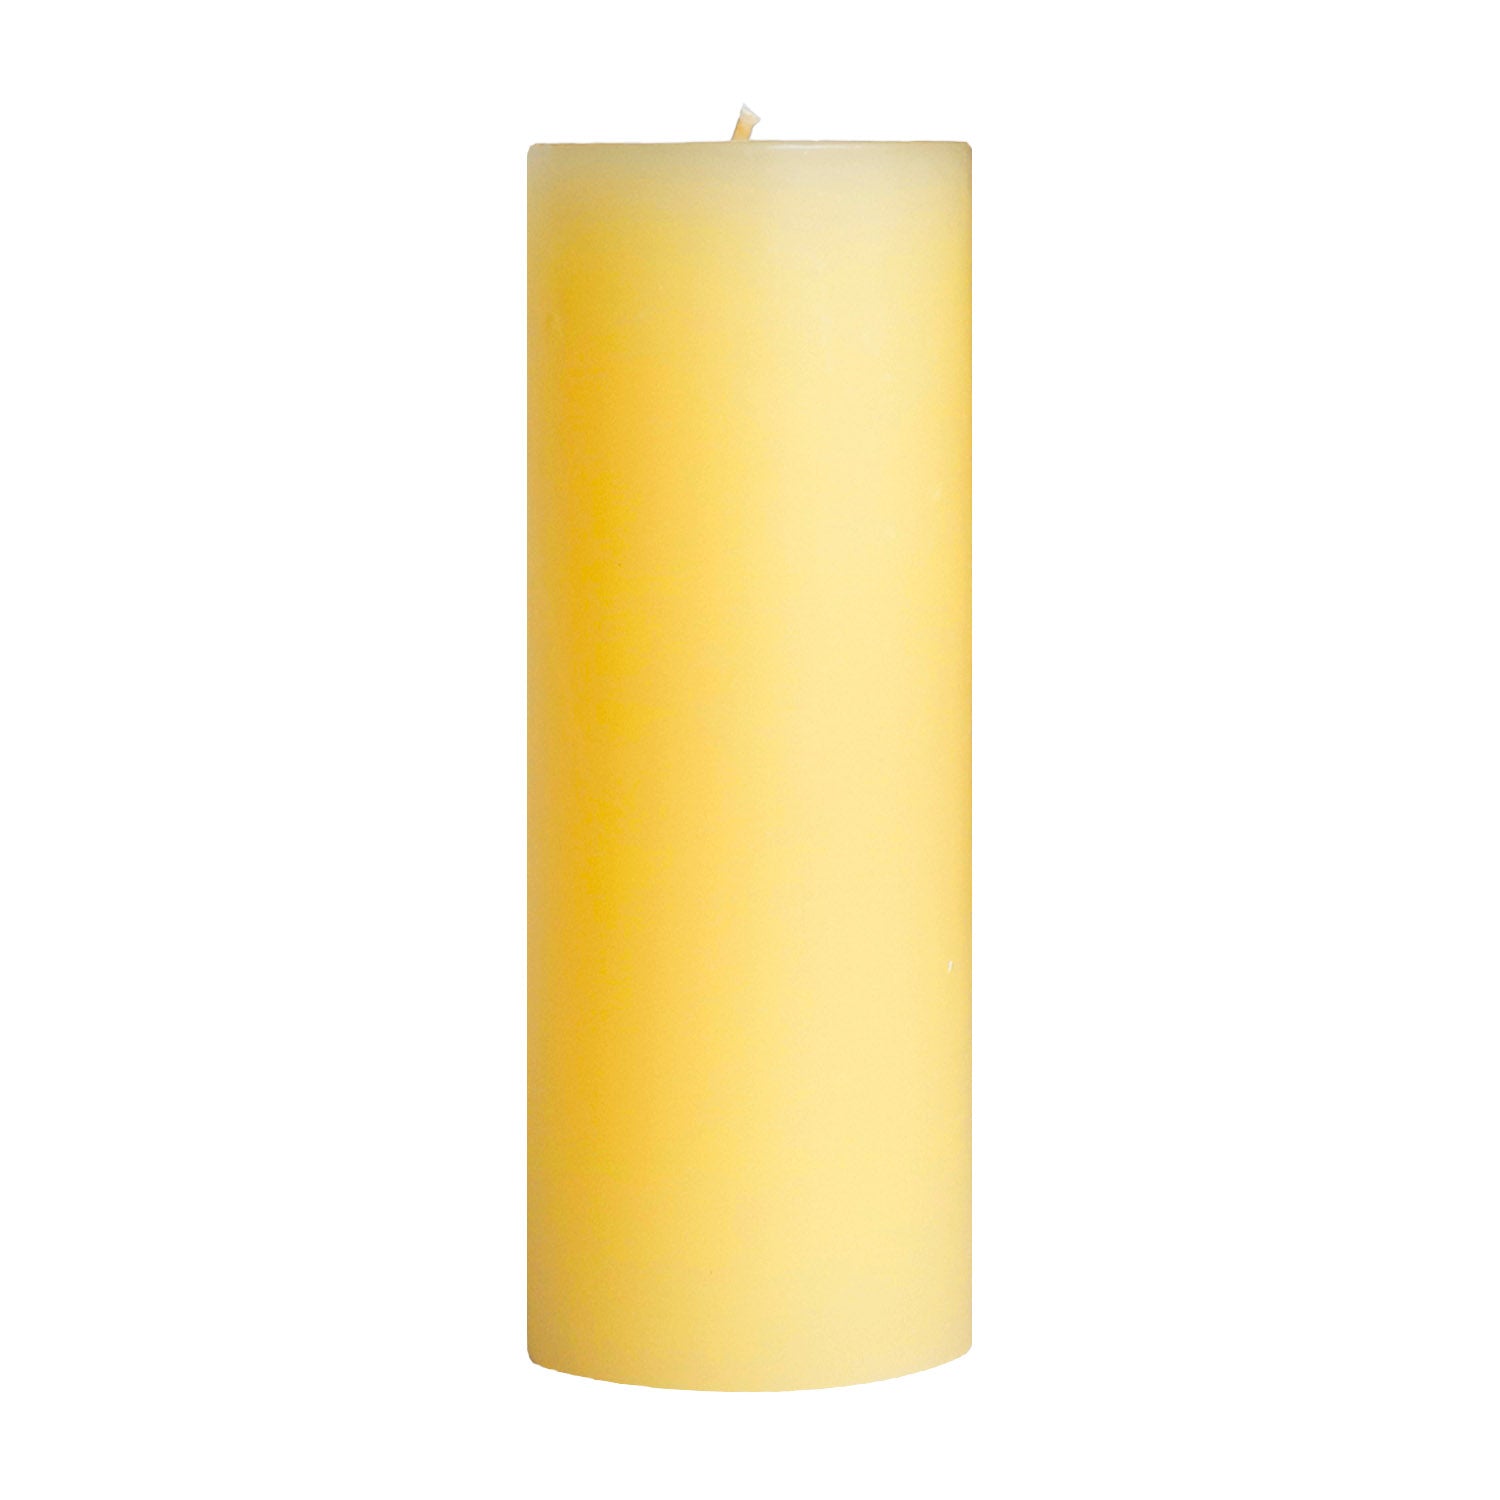 3x9" Rain scented pillar candle